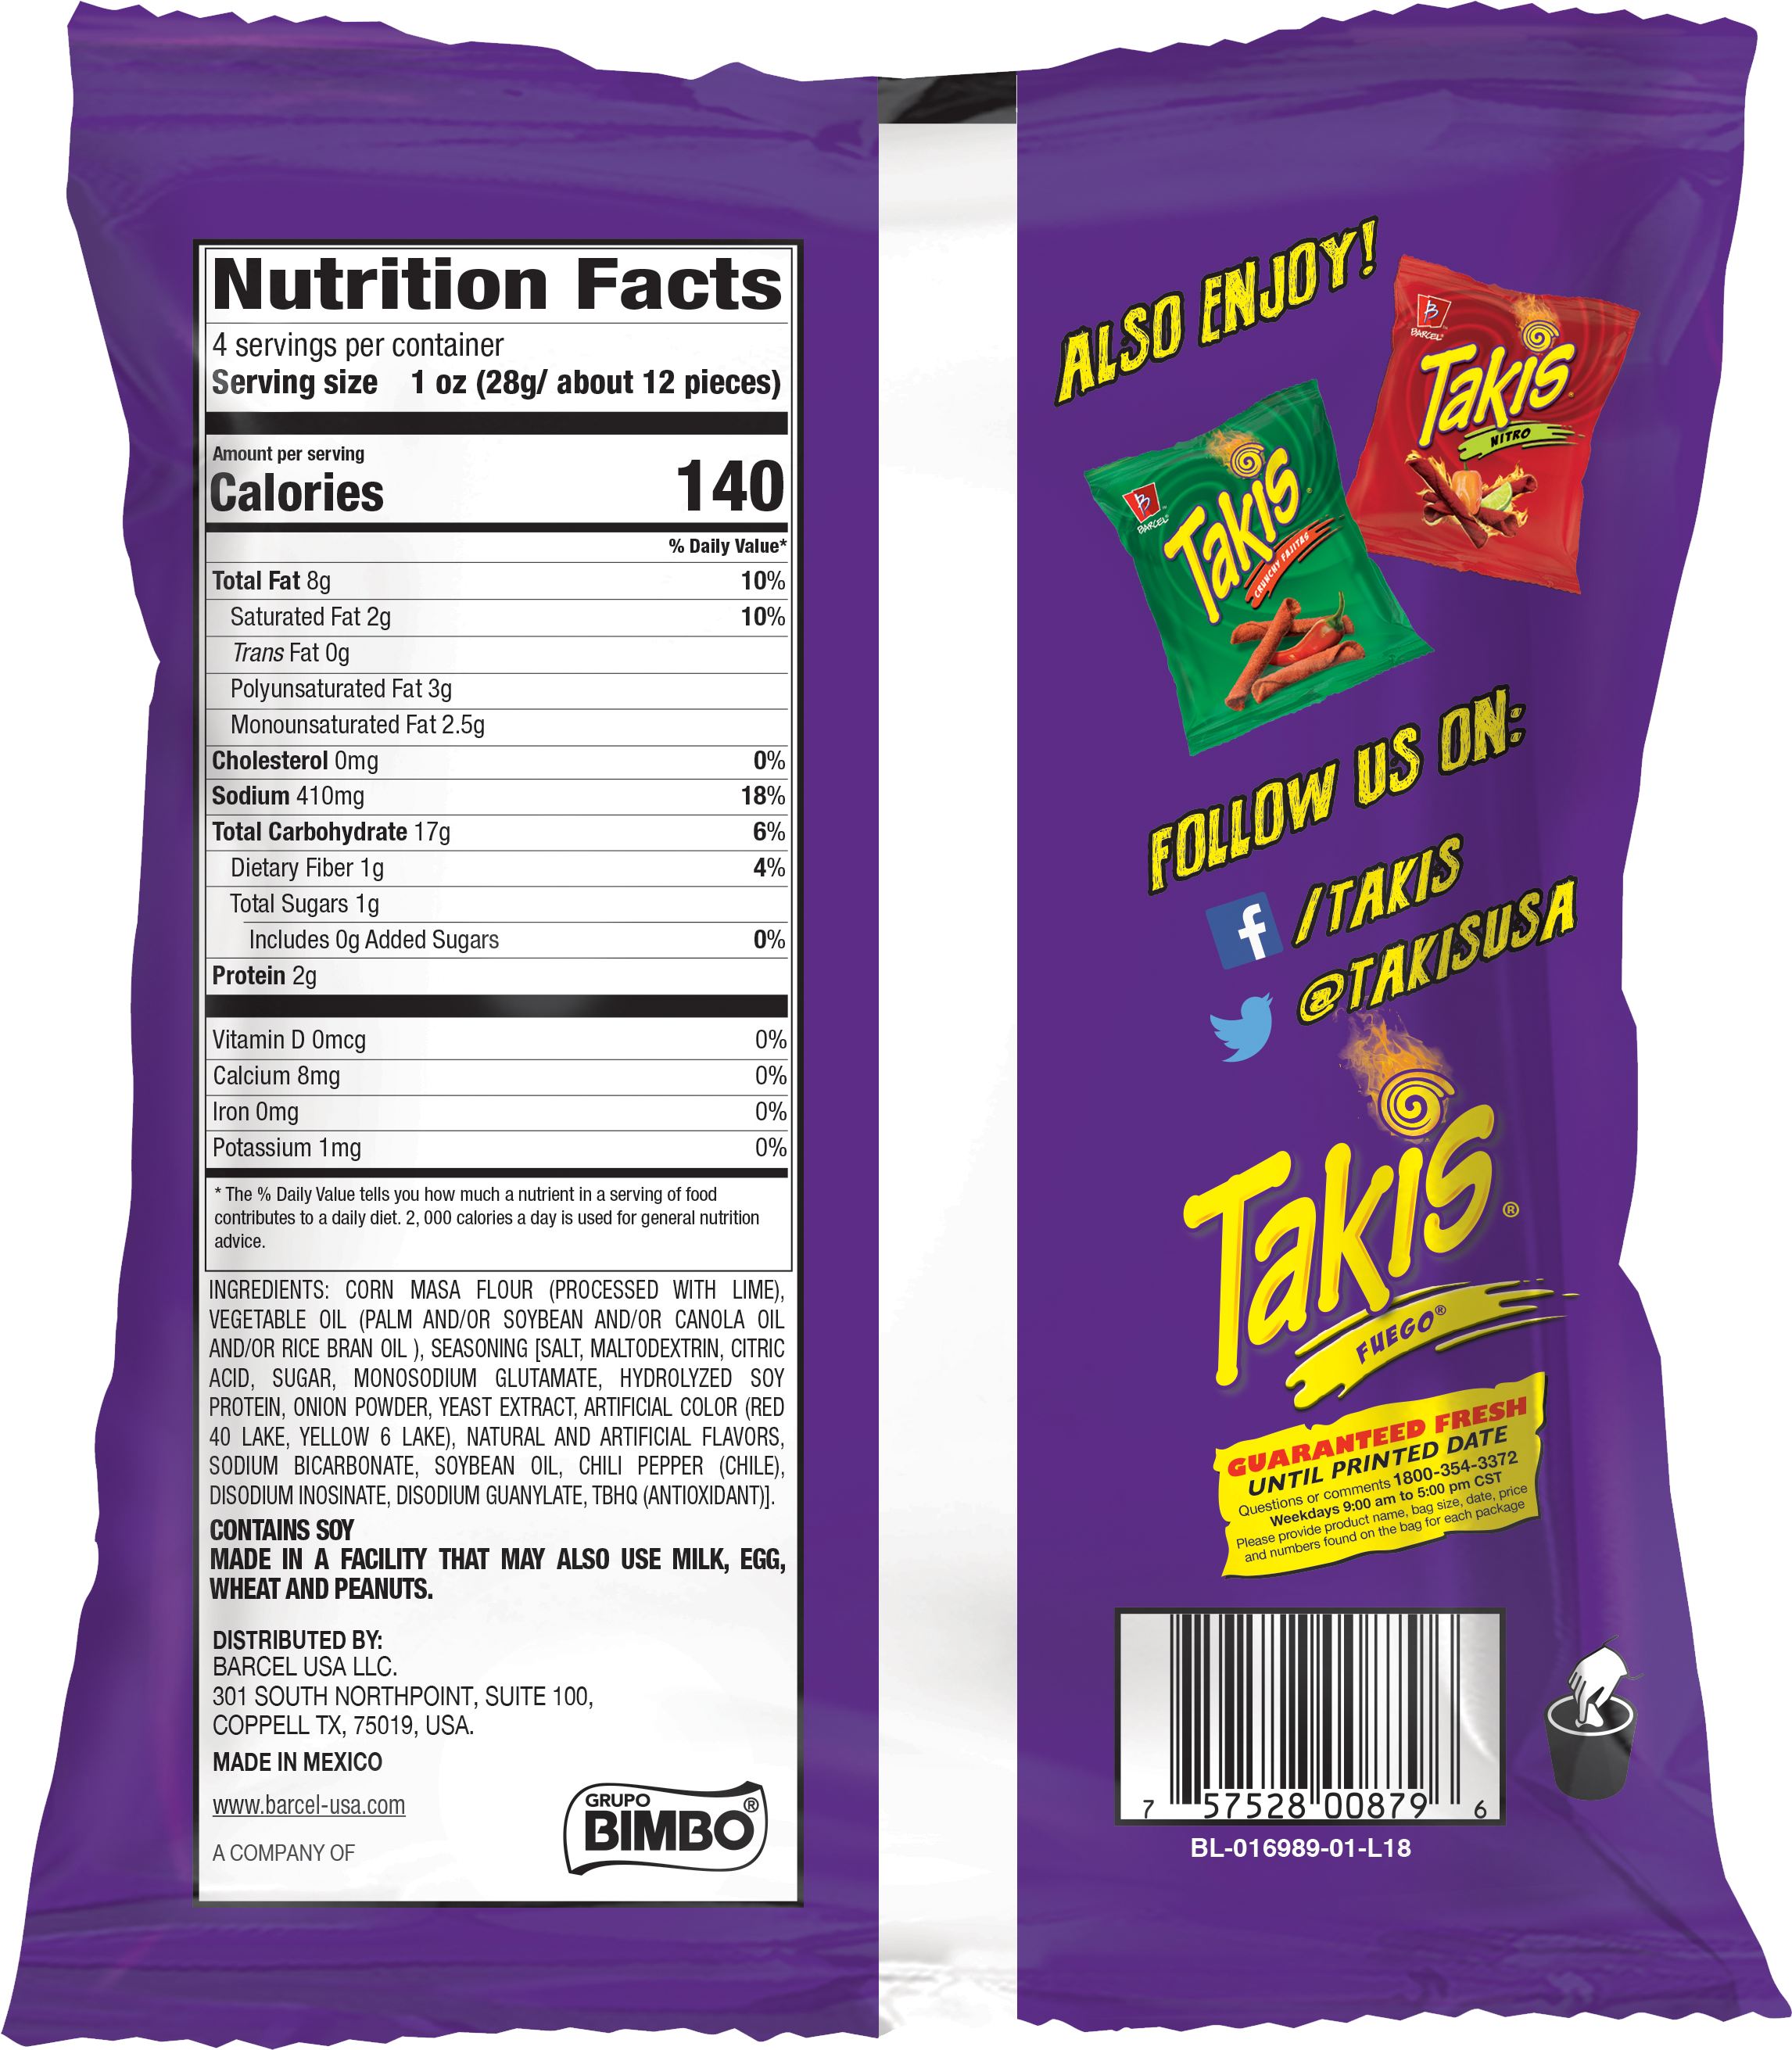 Takis Fuego Nutrition Labeland Social Media